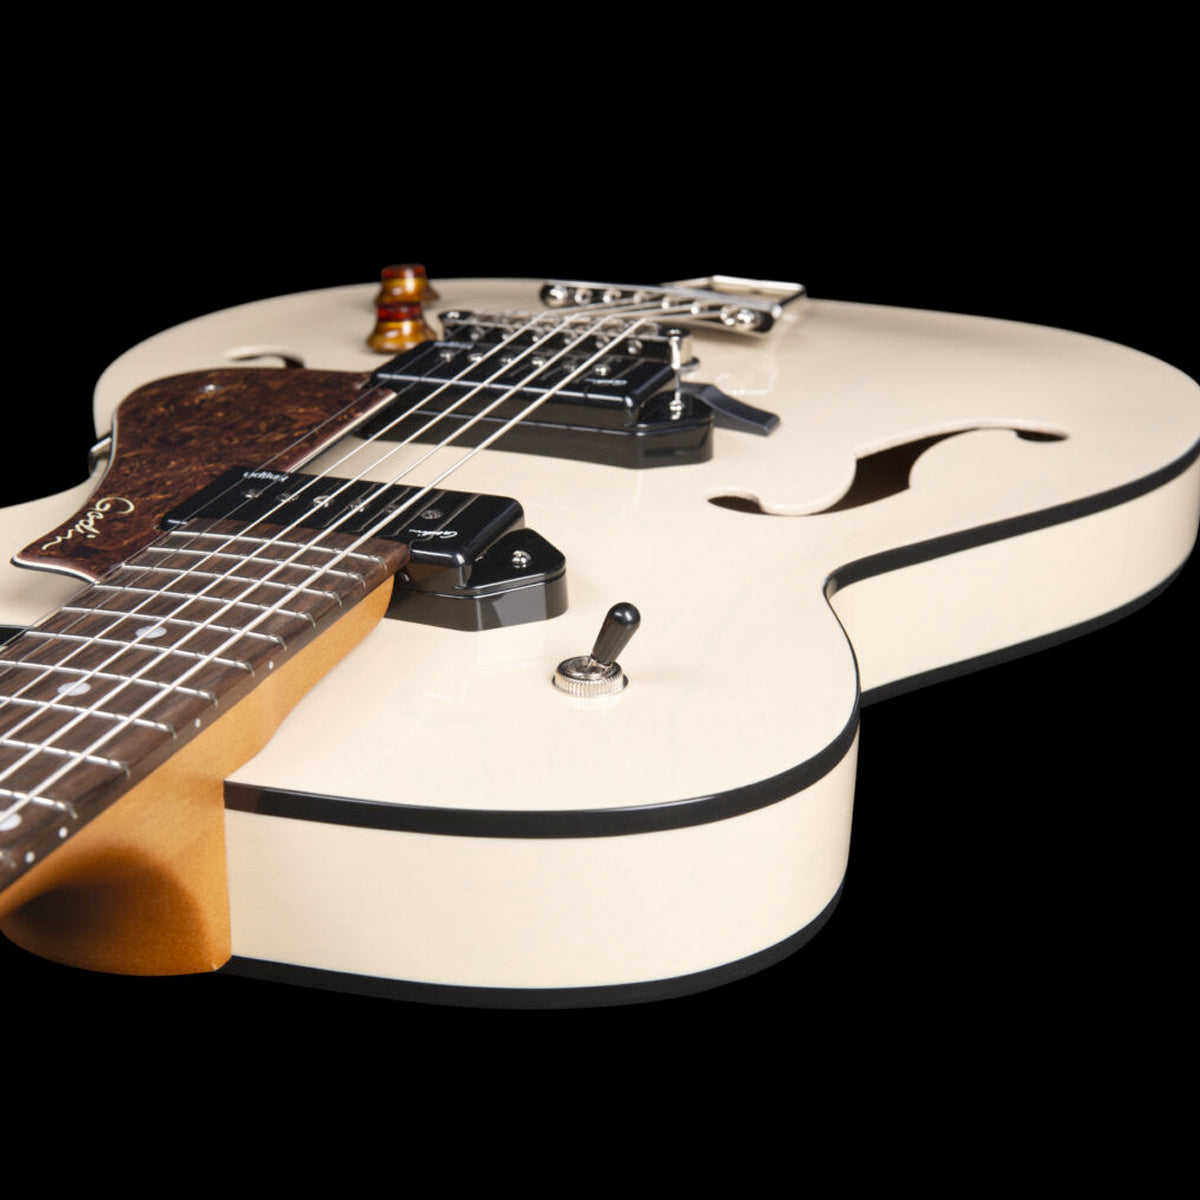 Godin 5th Avenue Thin Line Kingpin P90 Semi-Acoustic Guitar ~ Trans Cream, Electric Guitar for sale at Richards Guitars.